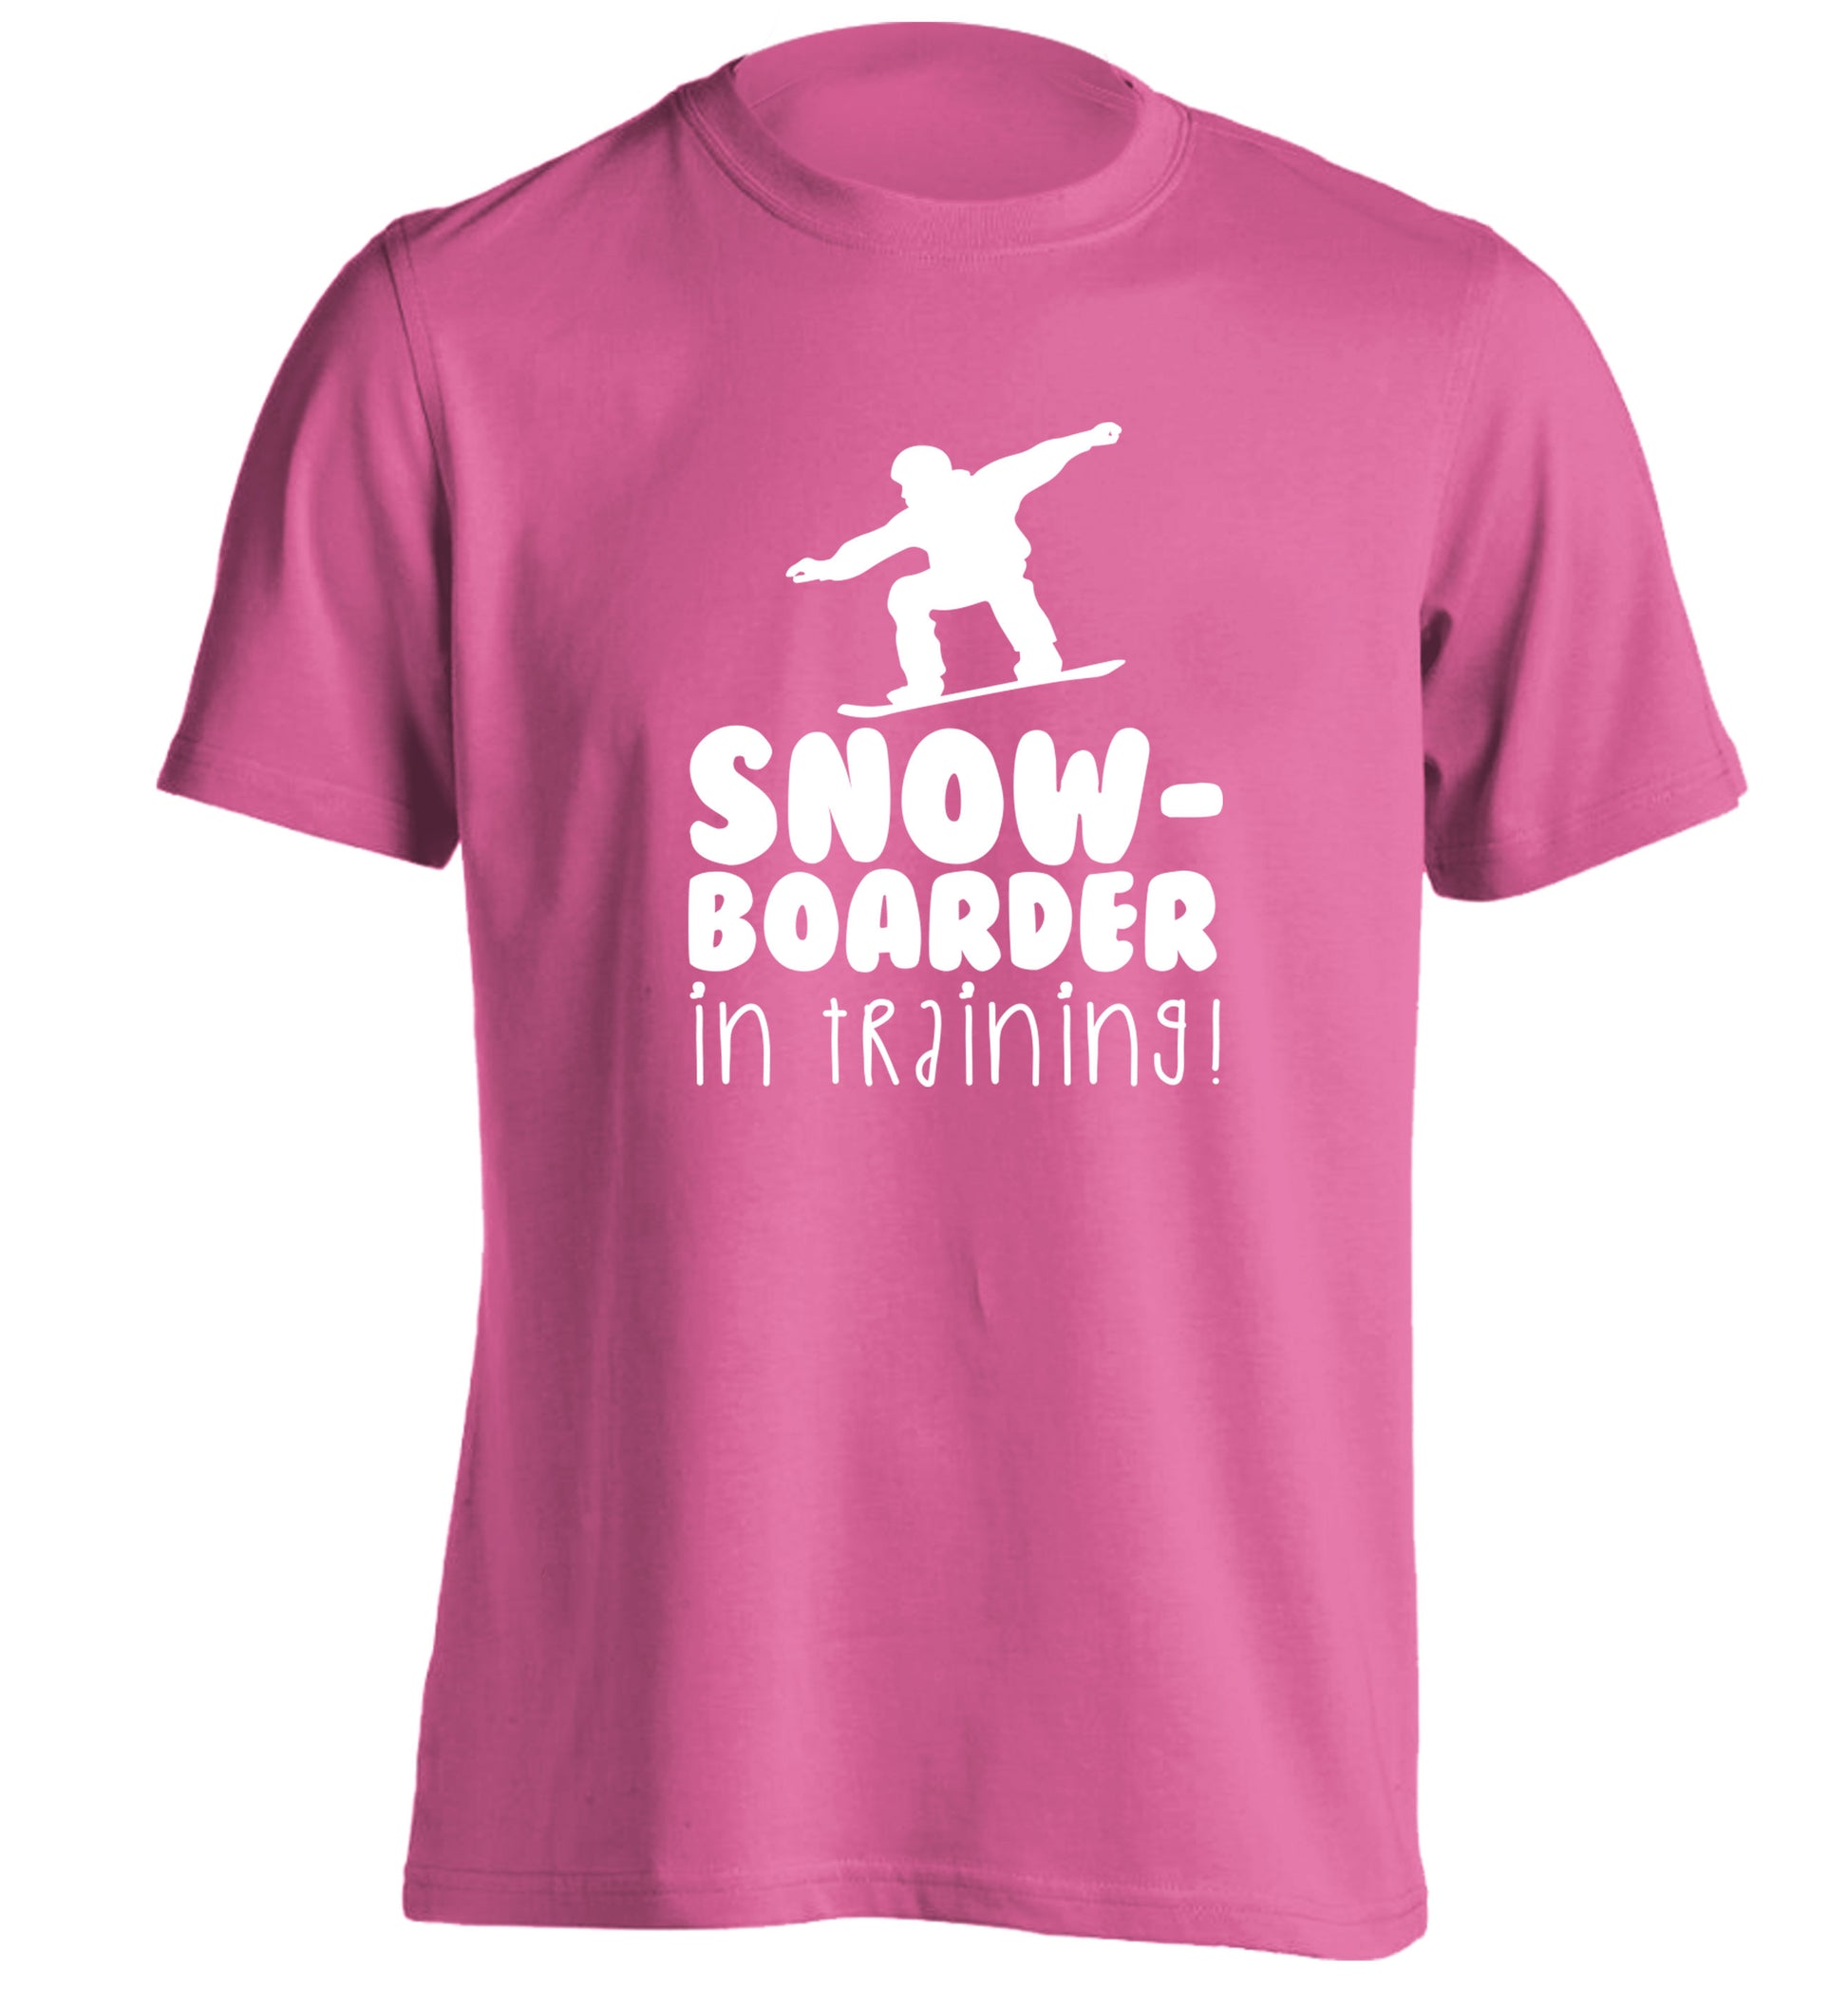 Snowboarder in training adults unisex pink Tshirt 2XL